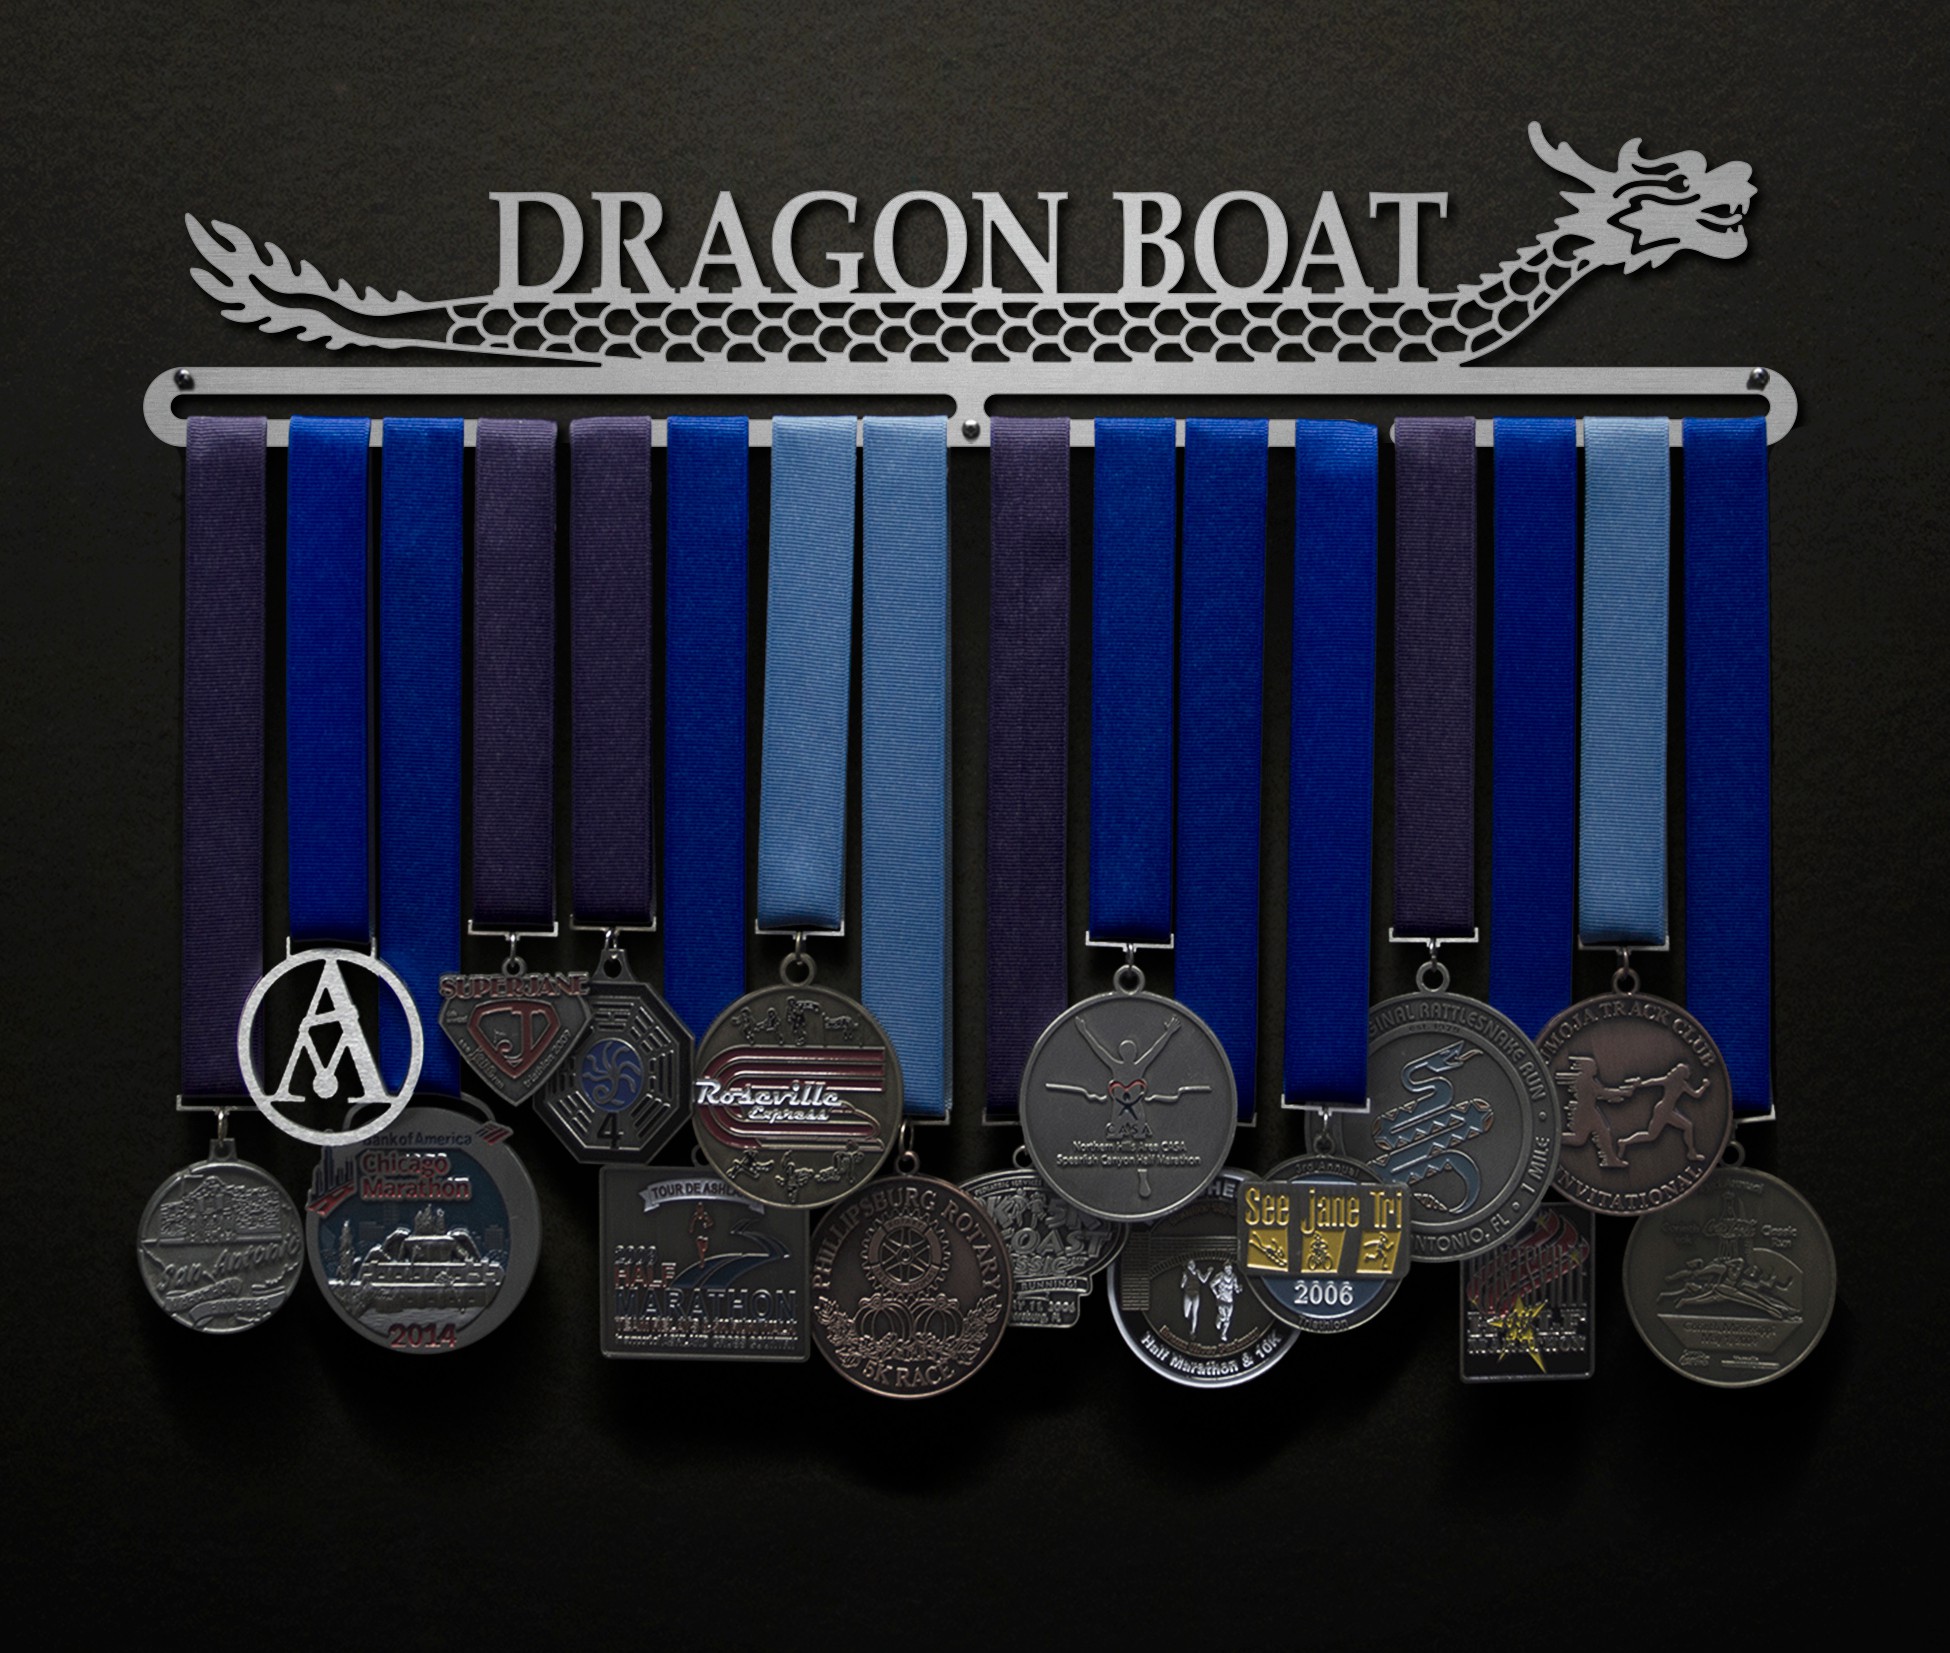 Dragon Boat: Dragon Boat text